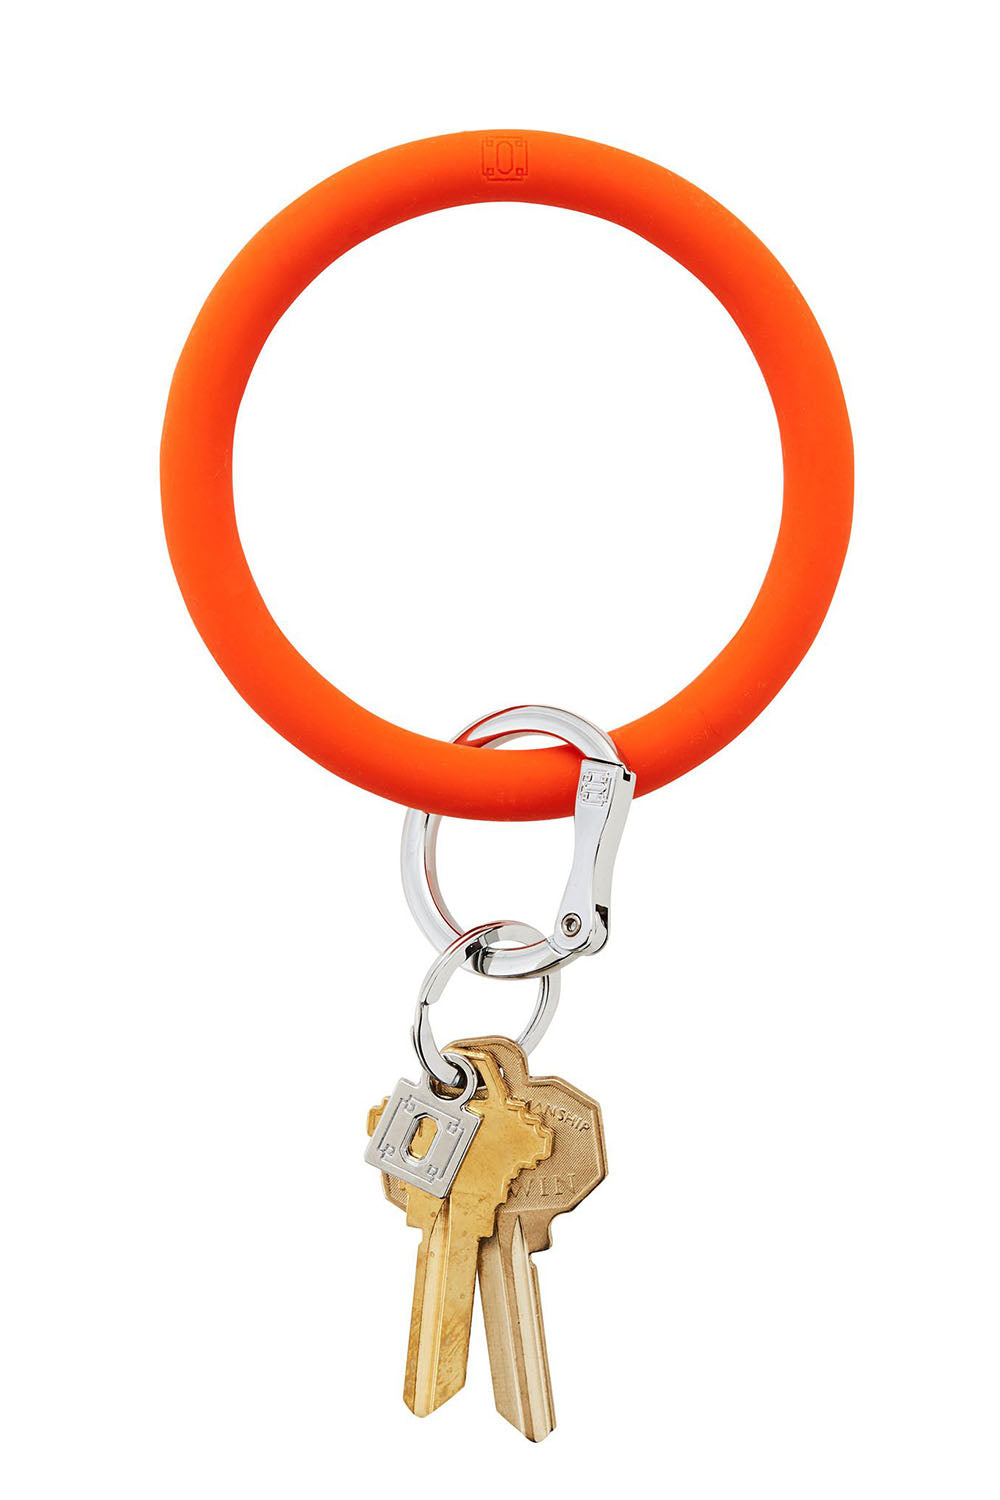 Silicone Big O Key Ring - Solid Orange Crush